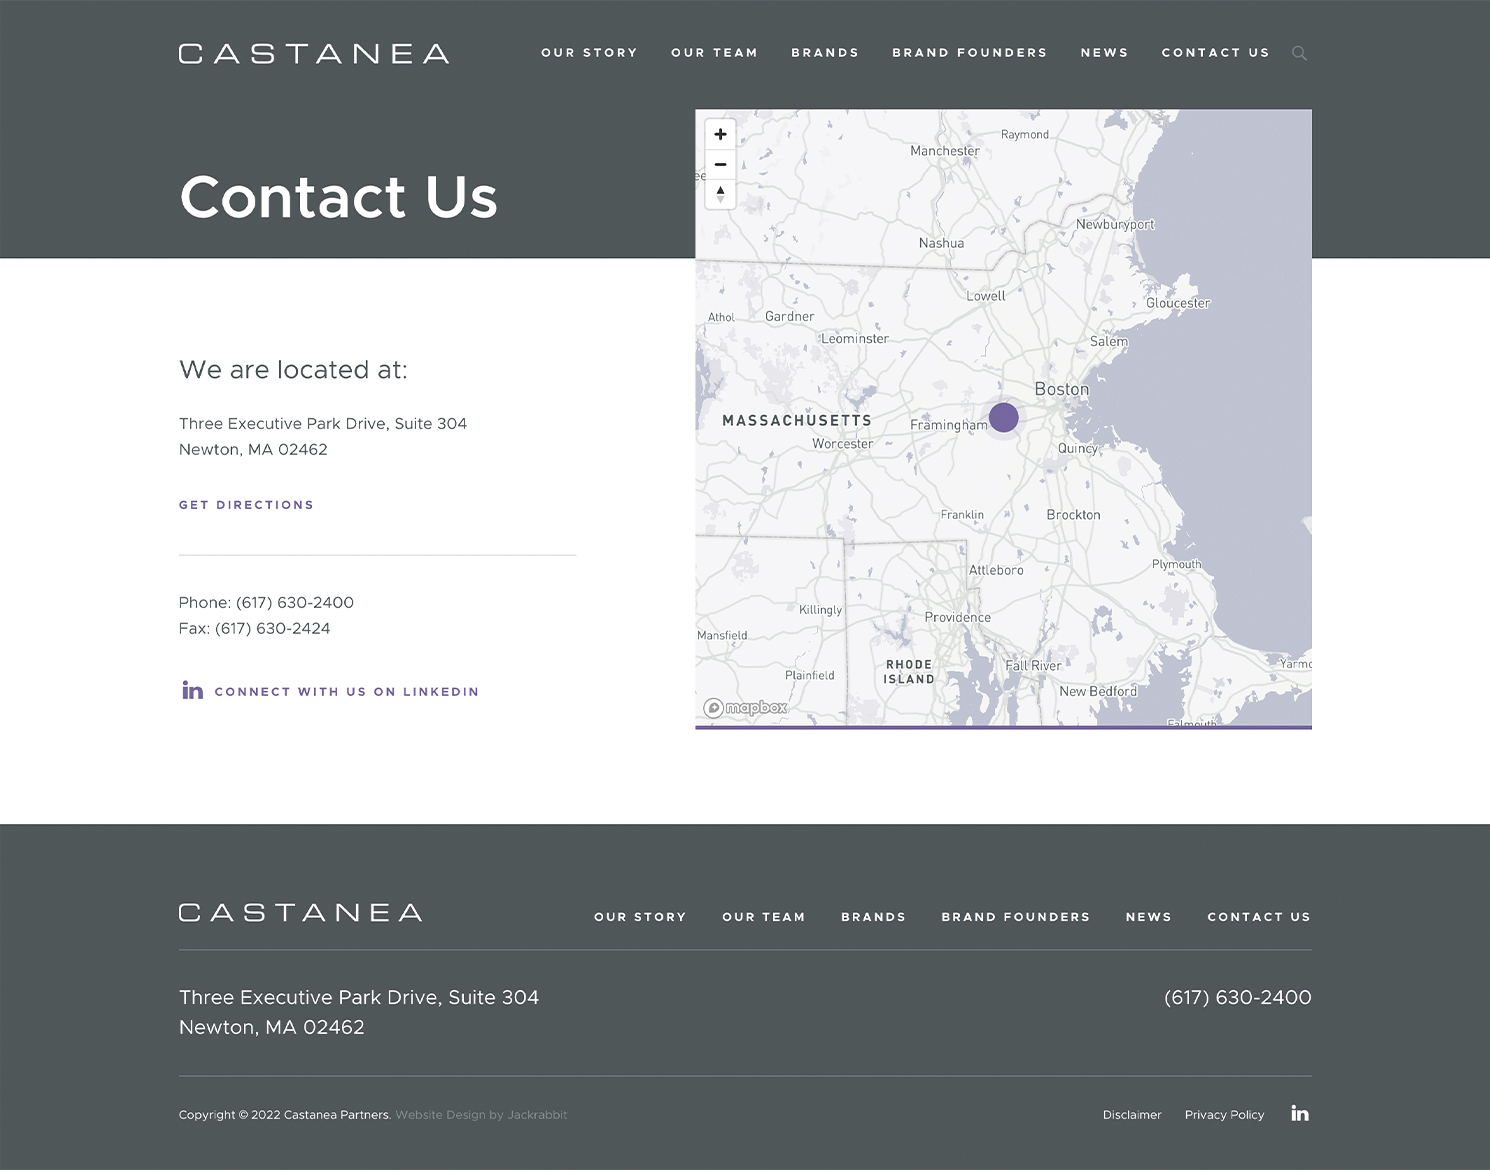 Castanea 'Contact Us' website page